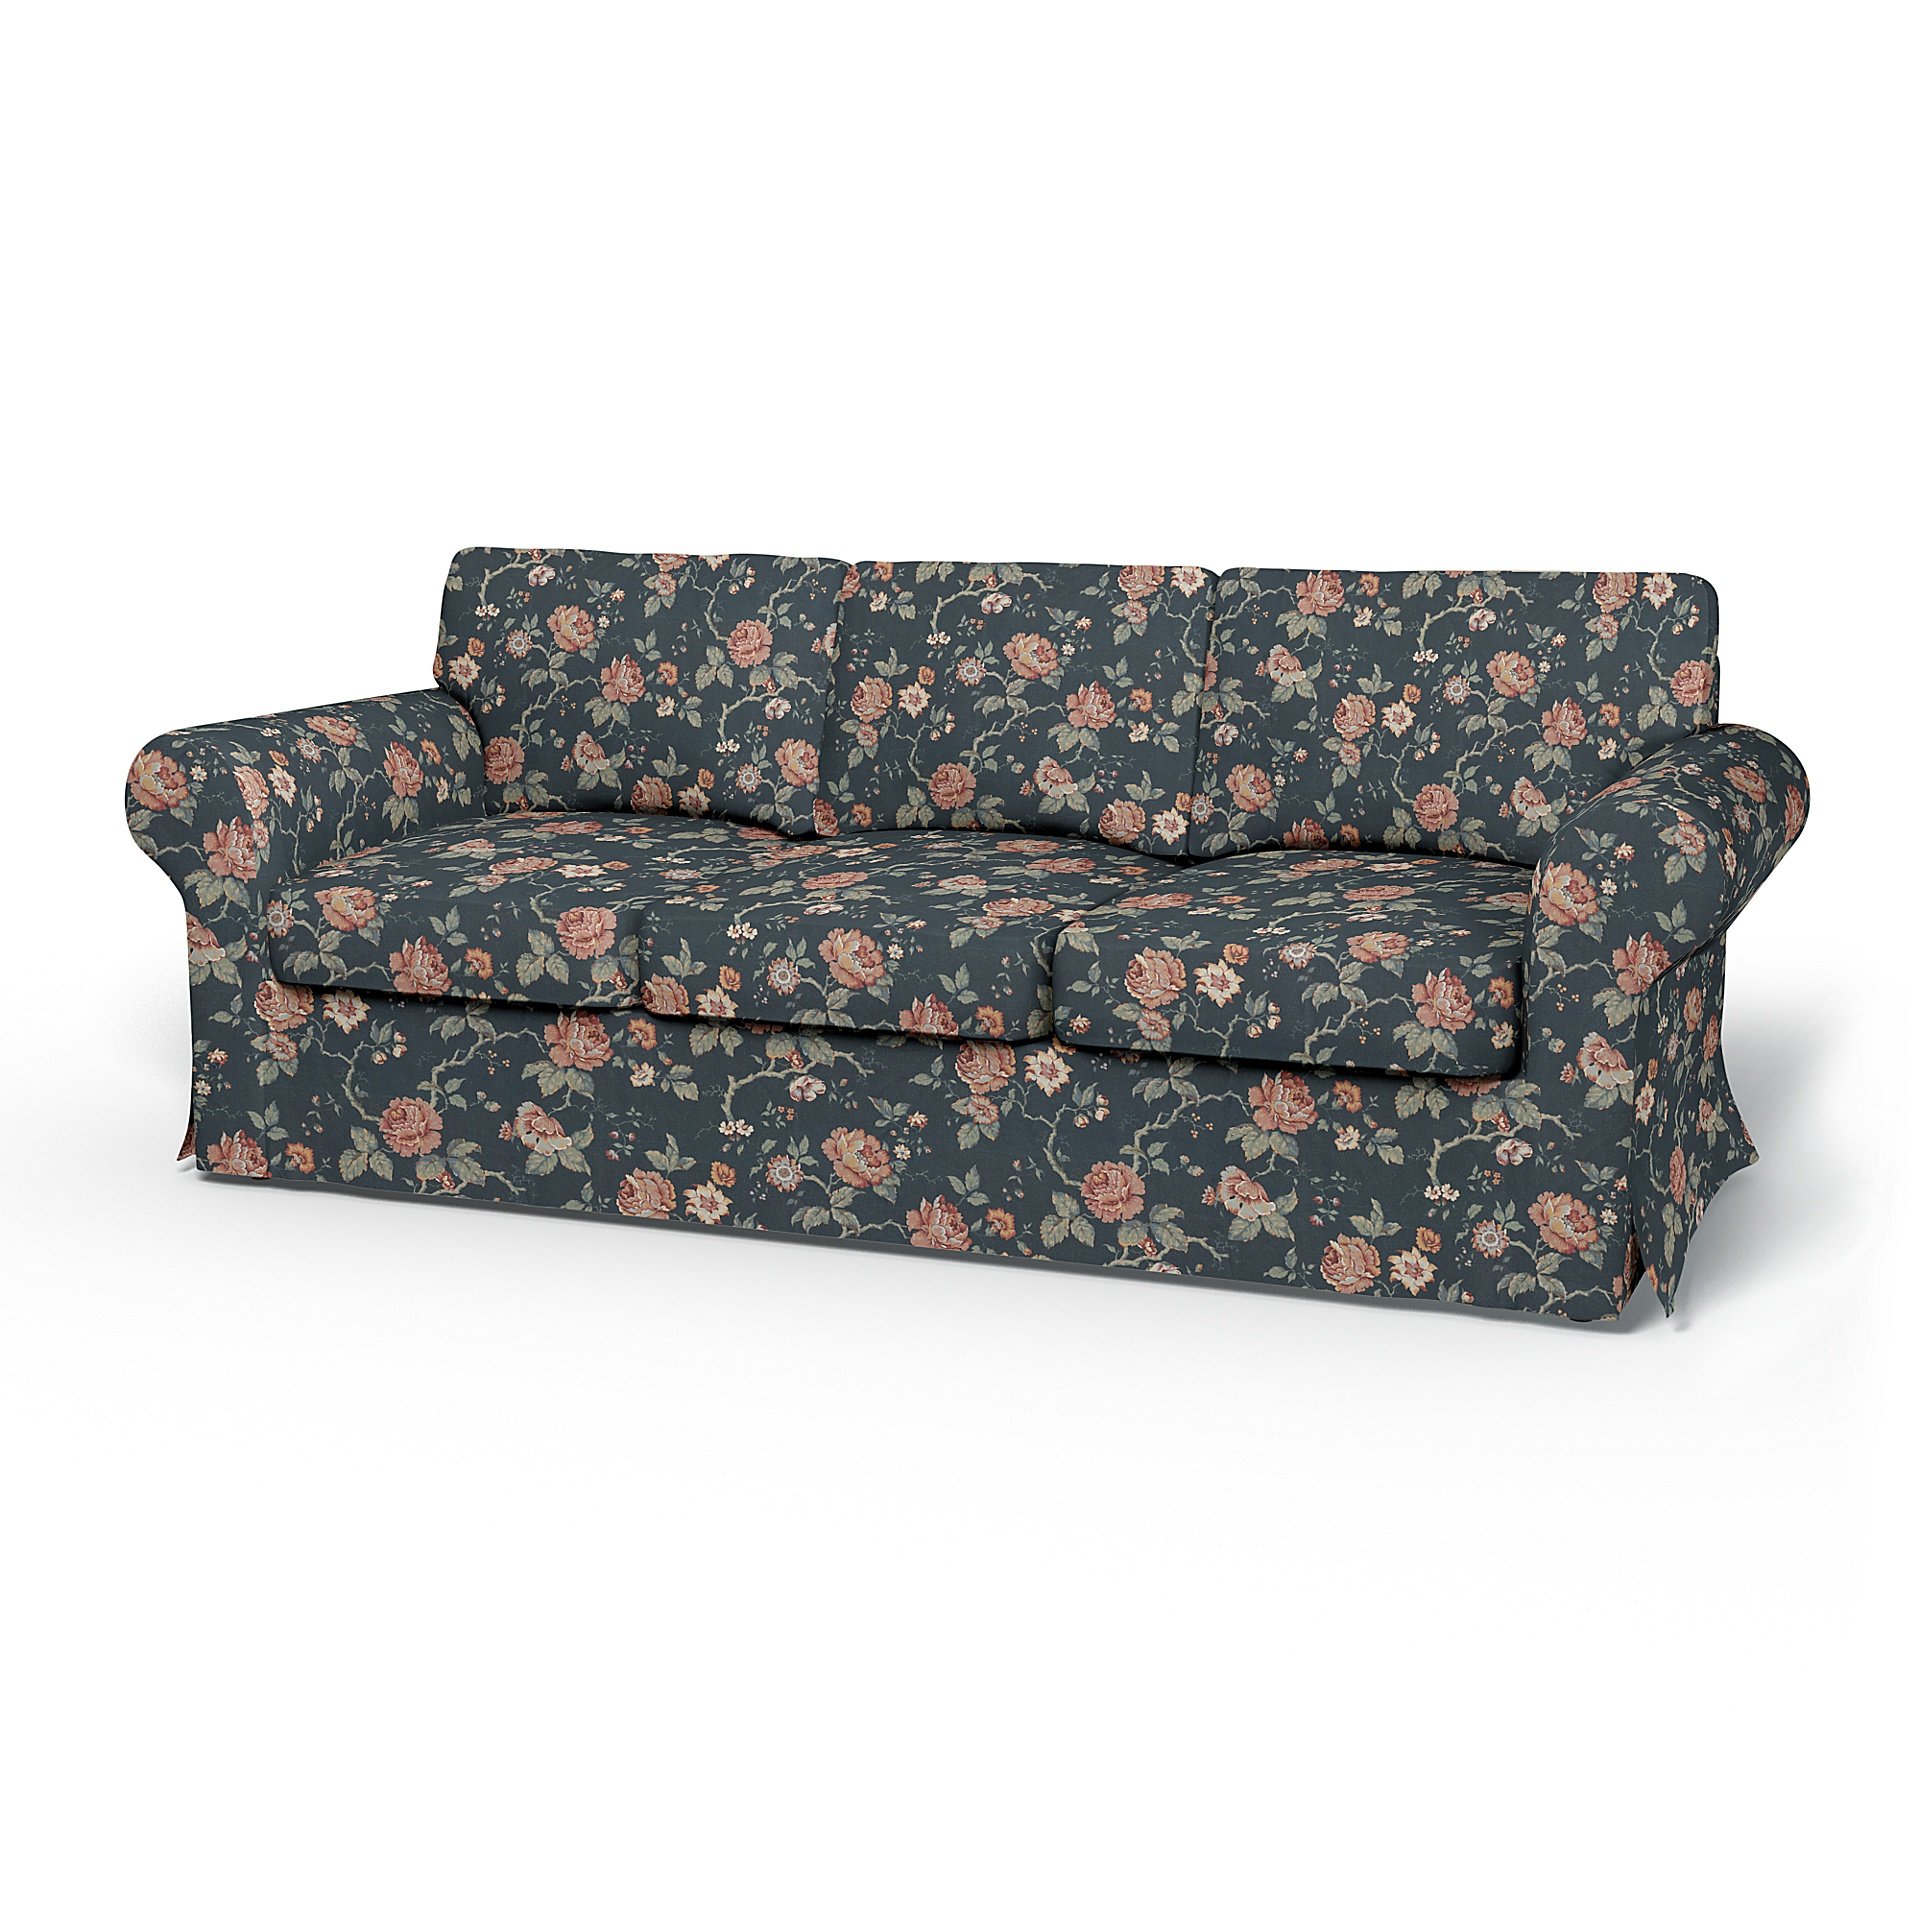 IKEA - Ektorp 3 Seater Sofa Bed Cover, Rosentrad Dark, BEMZ x BORASTAPETER COLLECTION - Bemz